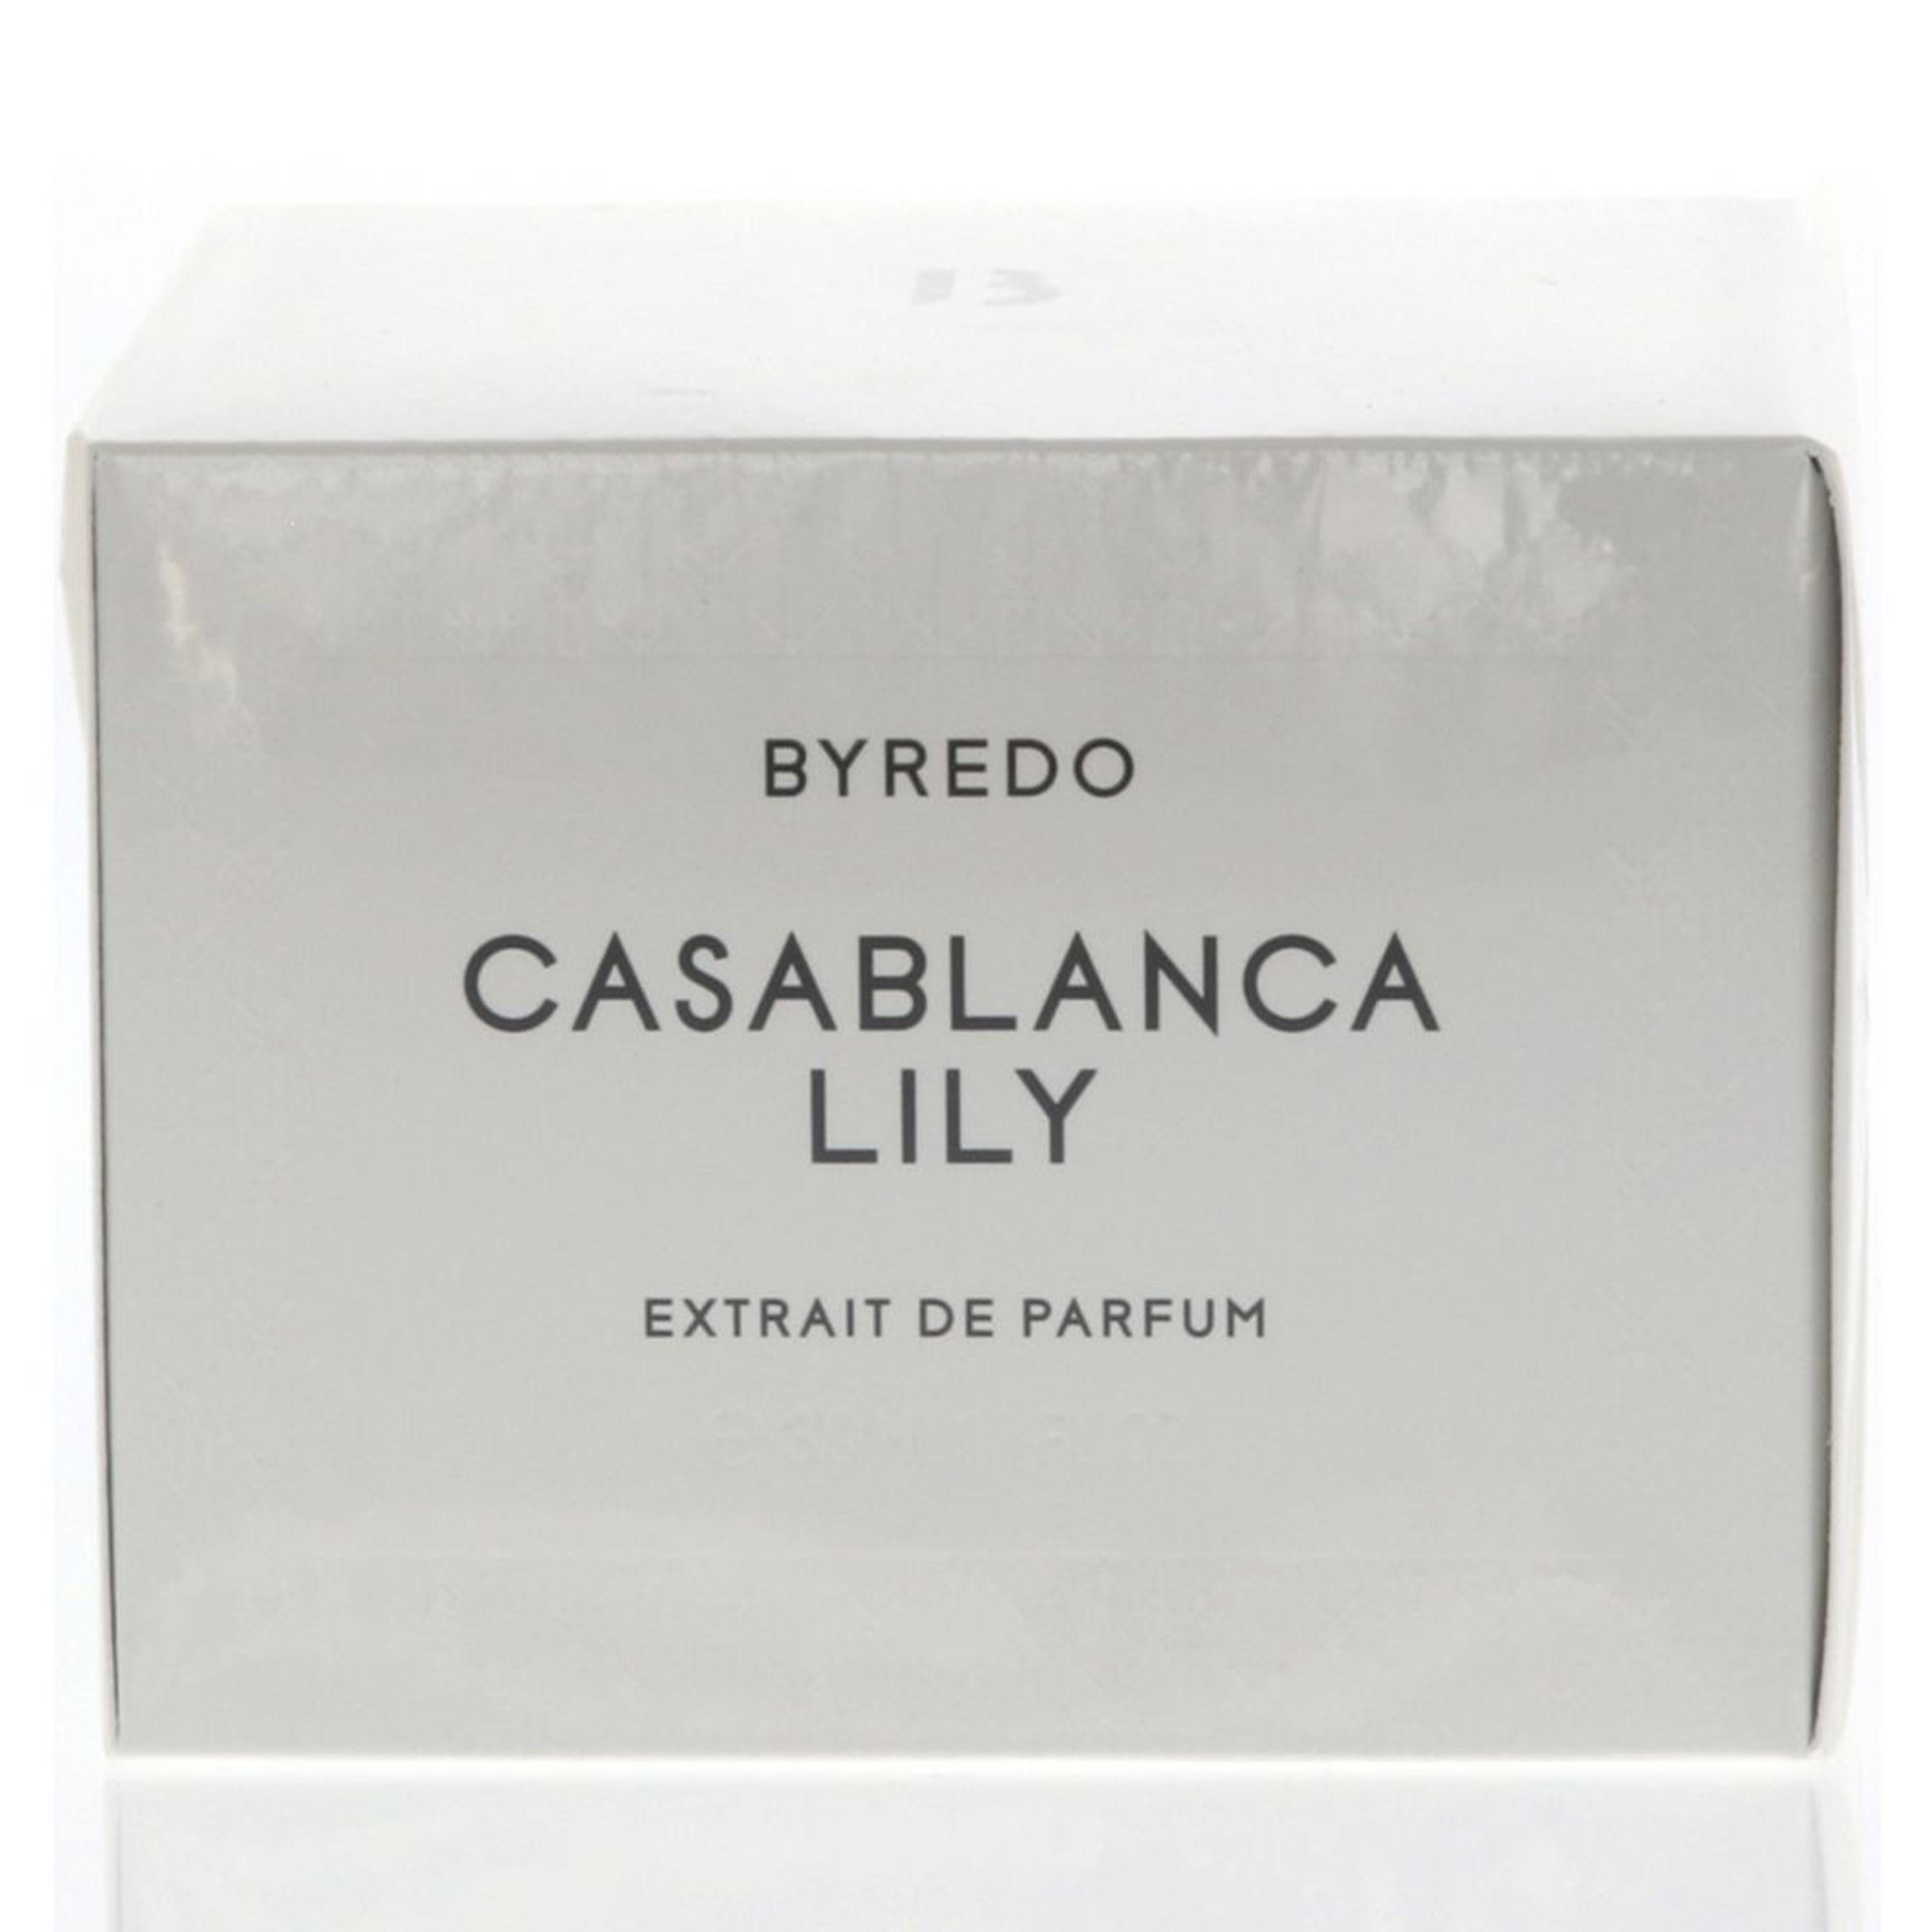 Byredo Casablanca Lily Extrait de Parfum 30ml Parfum Vapo für Damen